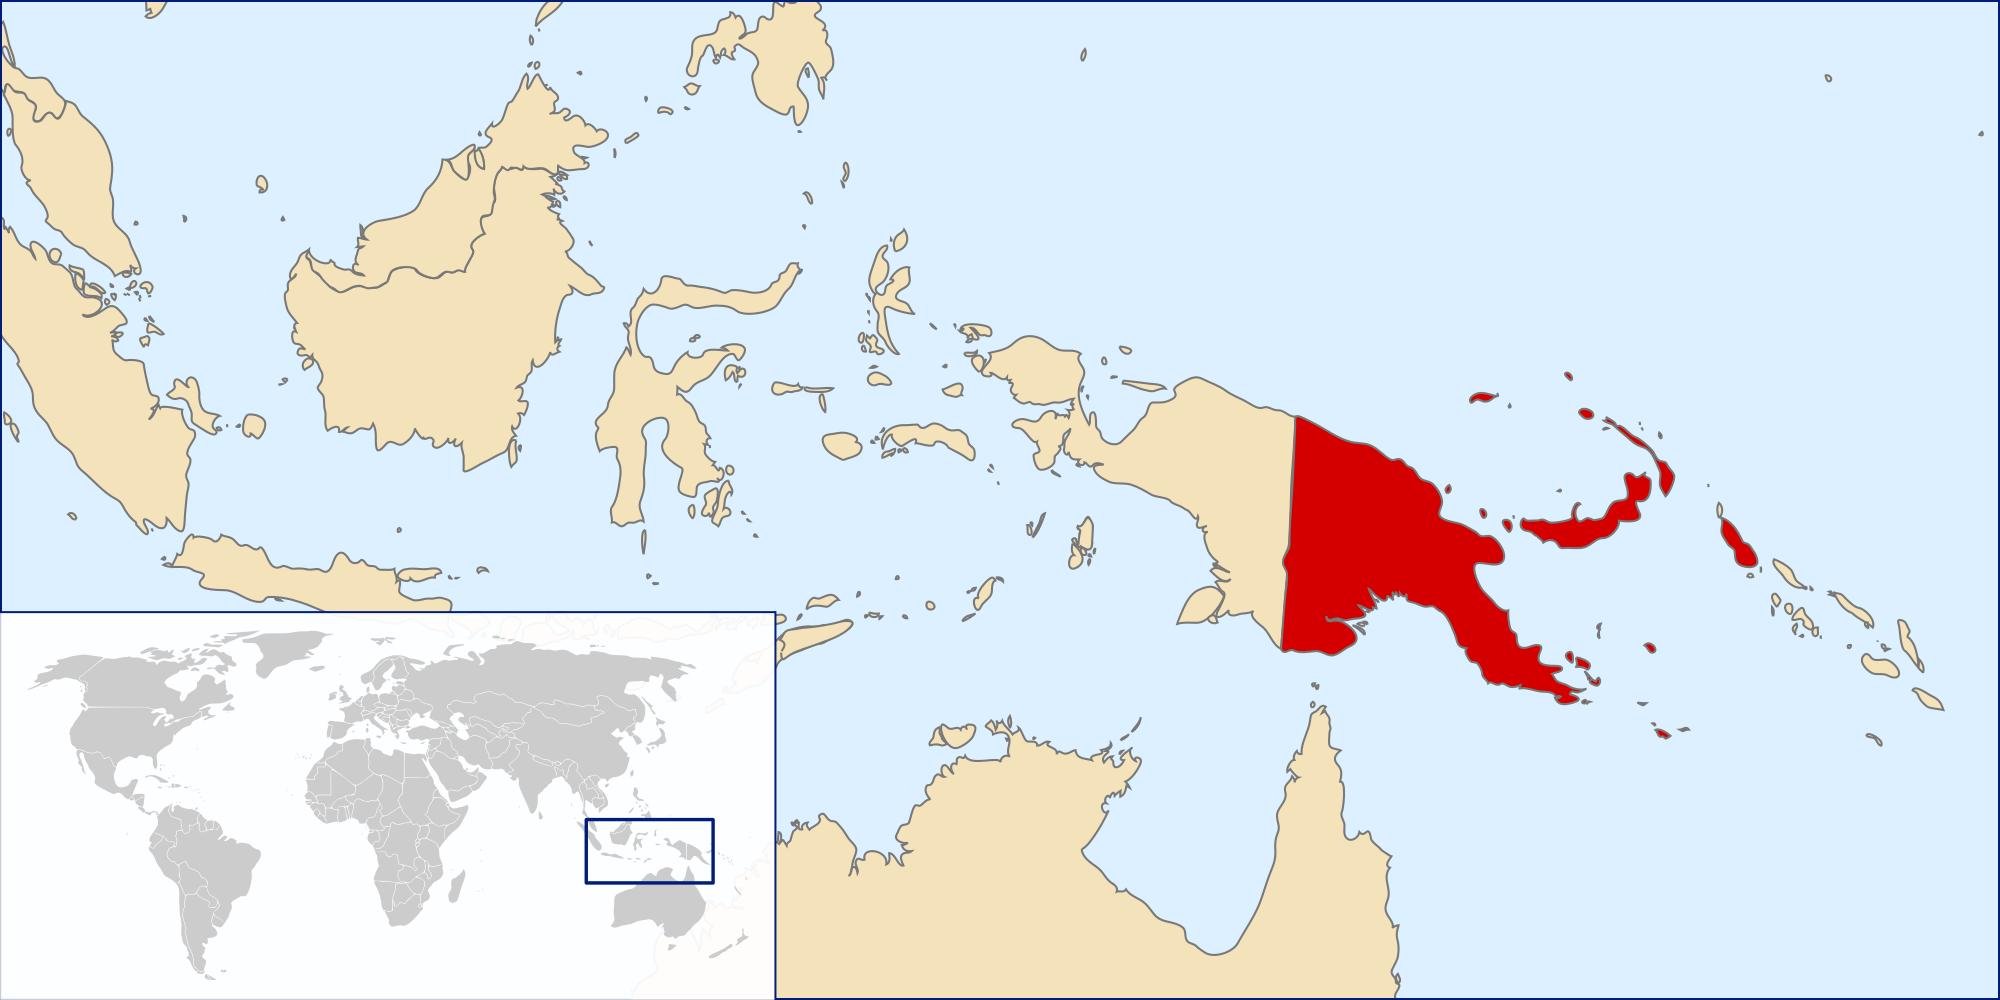 papua ny guinea kart Papua Ny Guinea World Map Papua Ny Guinea Plassering Pa Verdenskartet Melanesia Oseania papua ny guinea kart